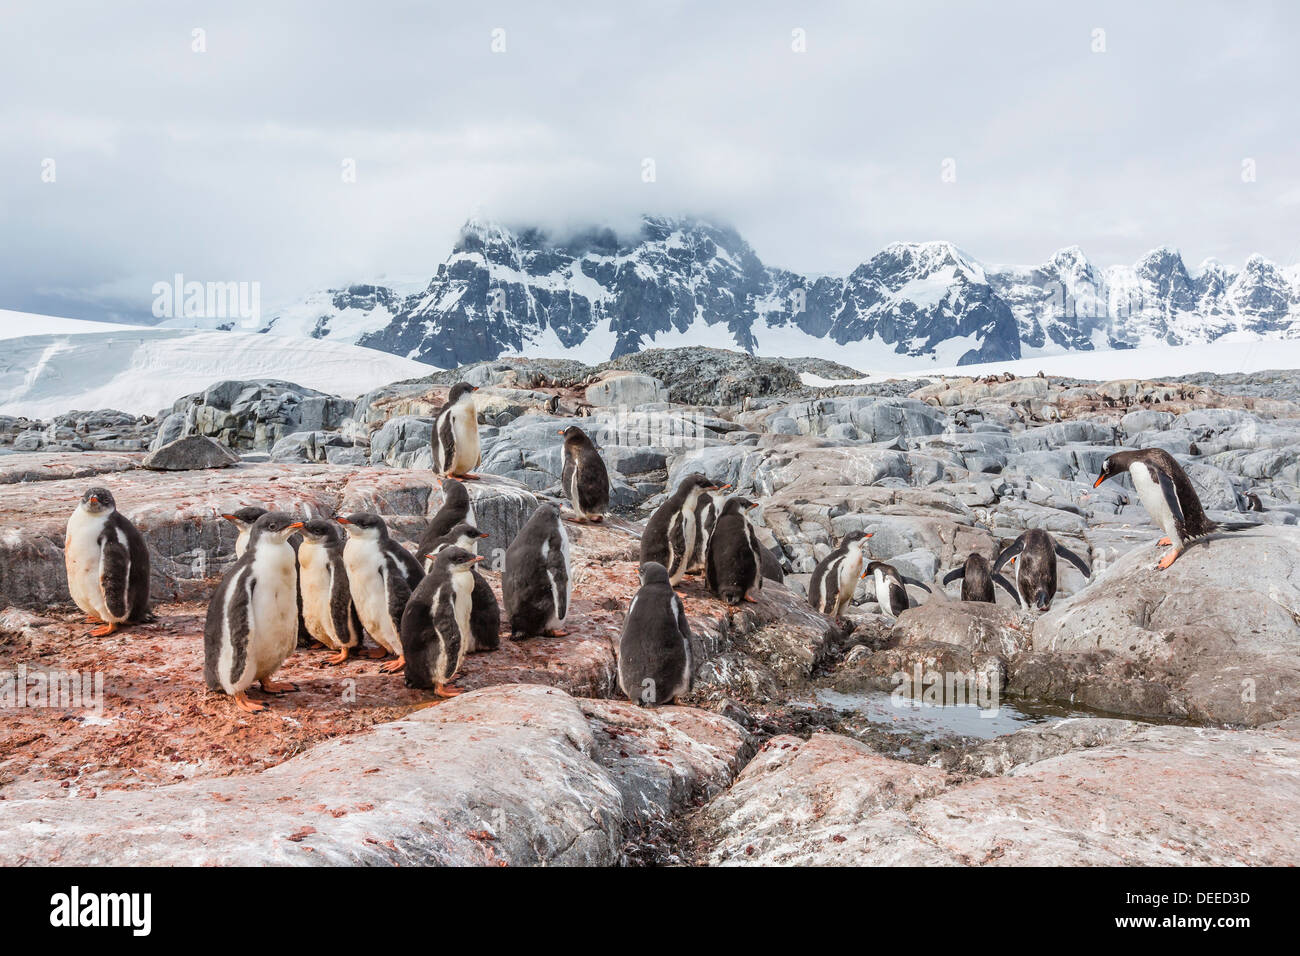 Pinguino Gentoo (Pygoscelis papua) pulcini creche, Jougla Point, isola Wiencke, Antartide, Oceano Meridionale Foto Stock